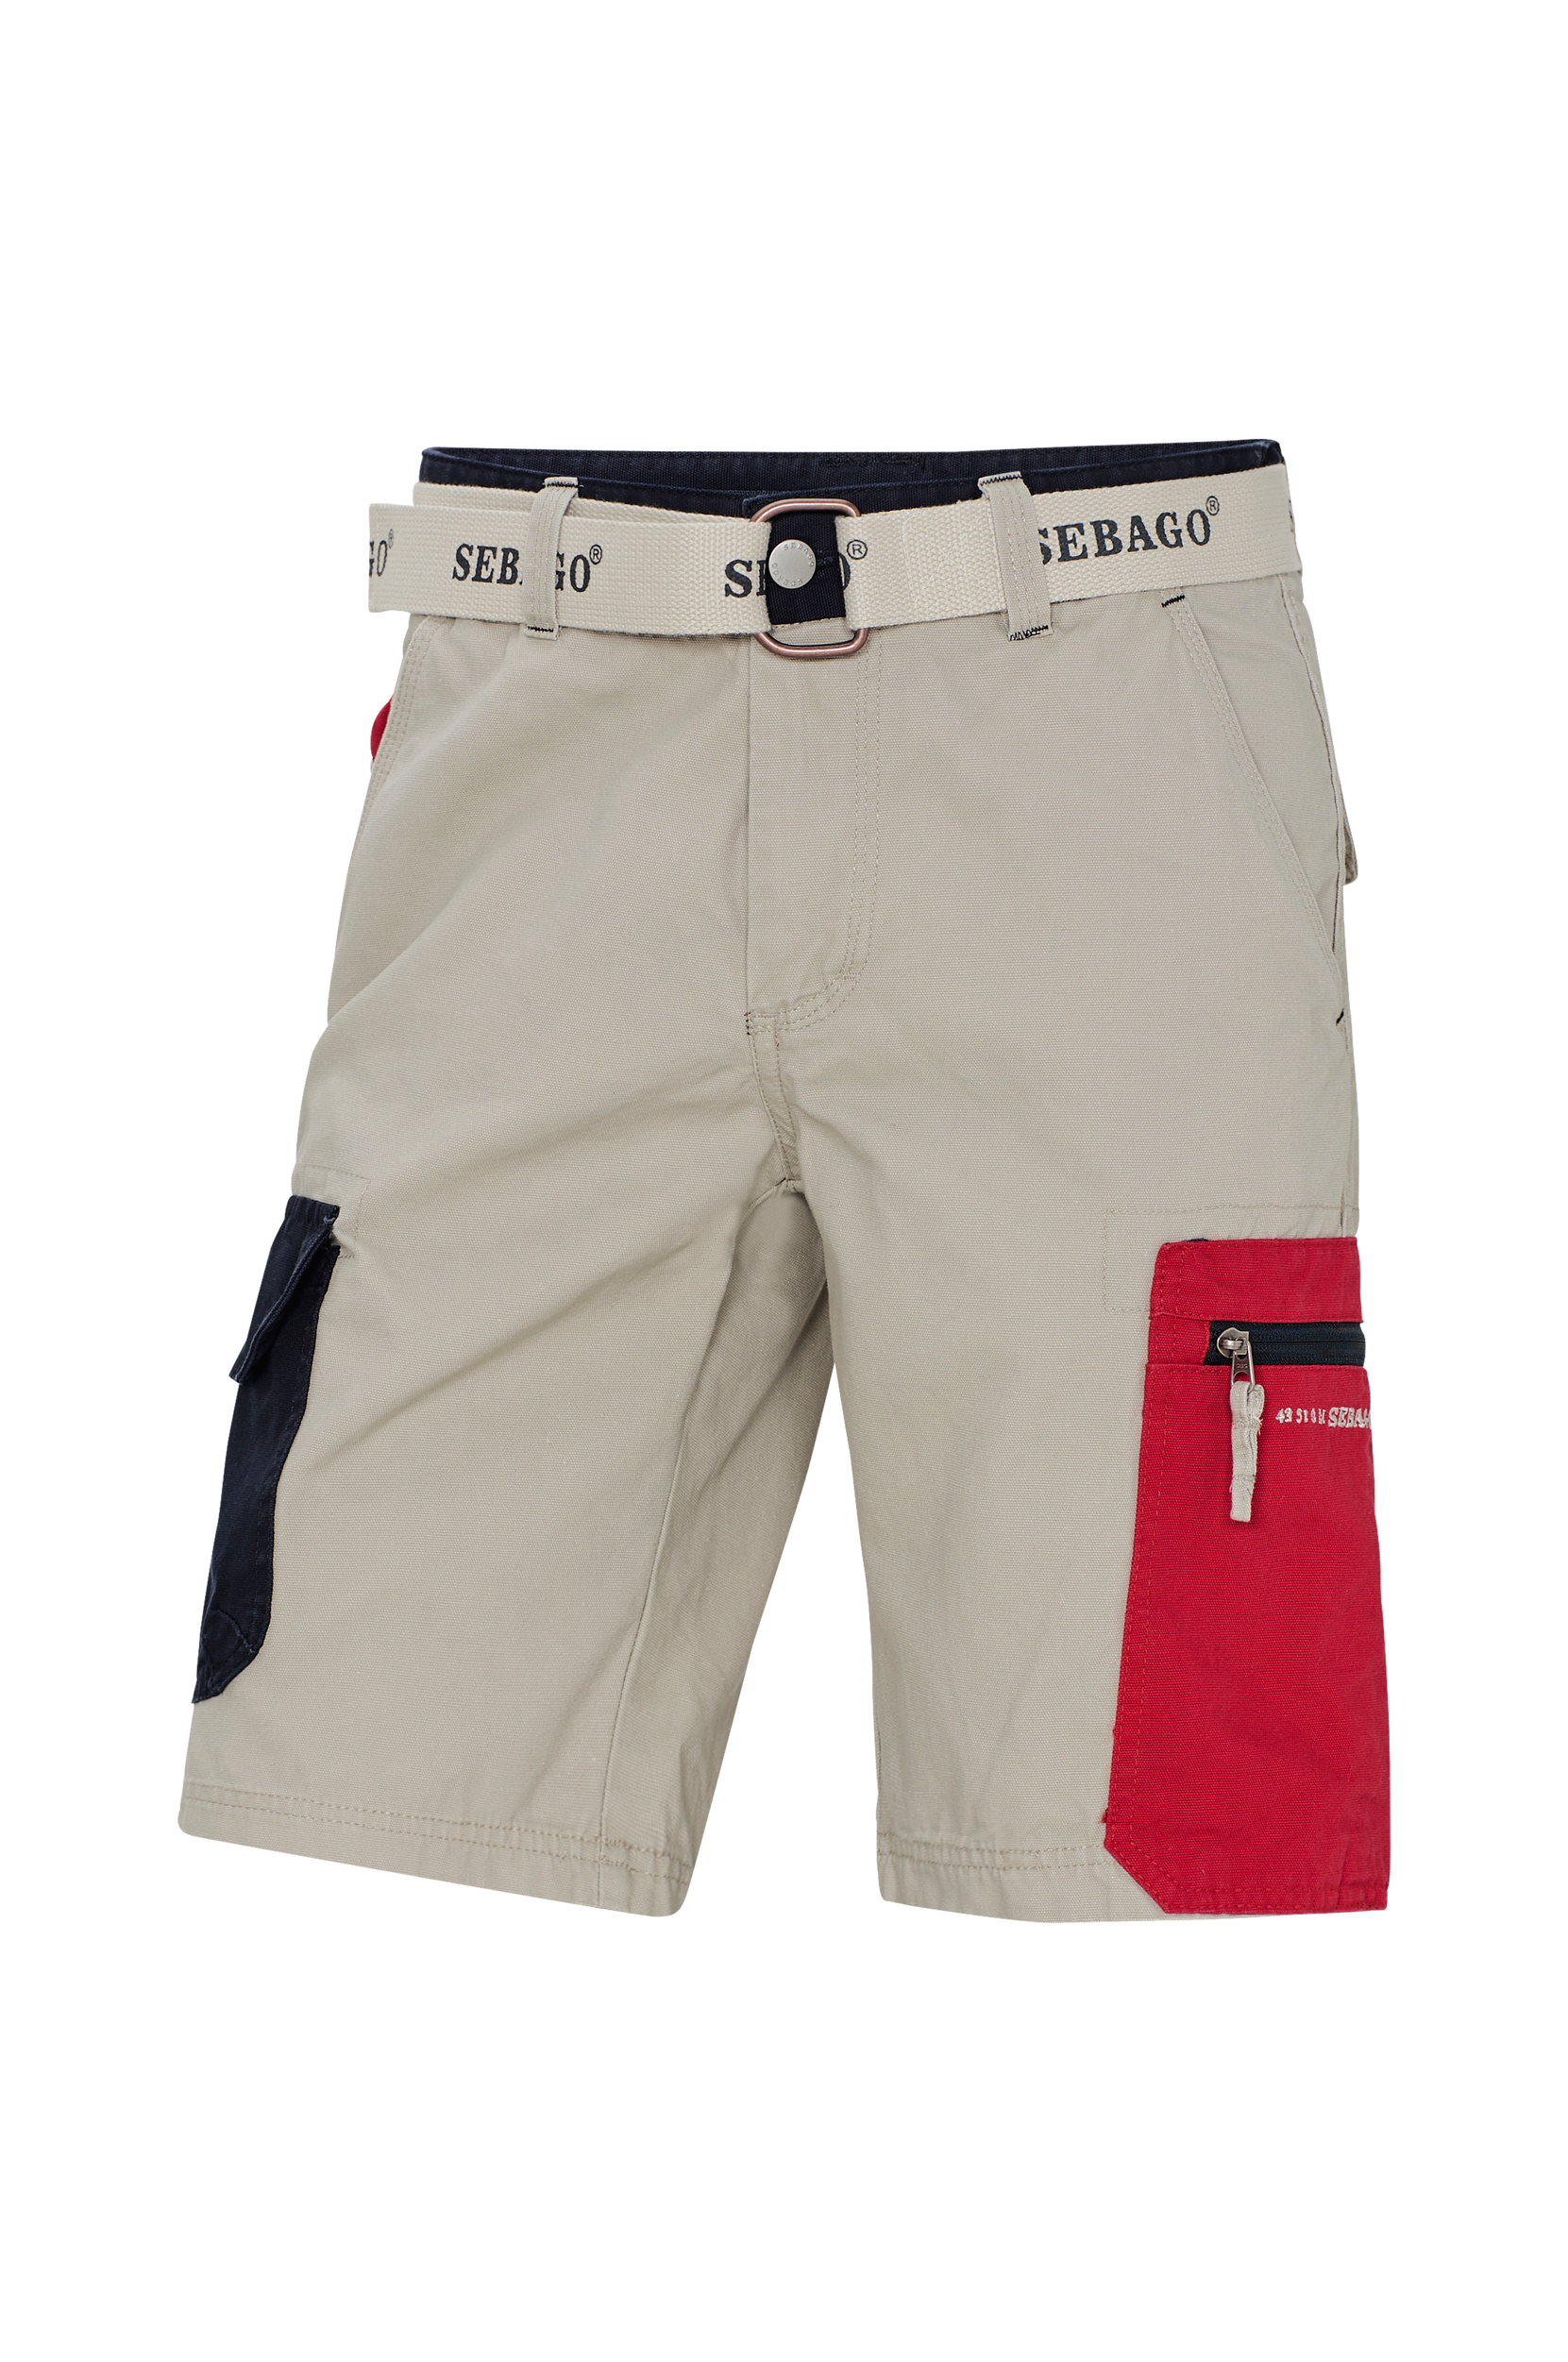 Sebago - Cargoshorts Red Pocket Shorts - Beige - XL